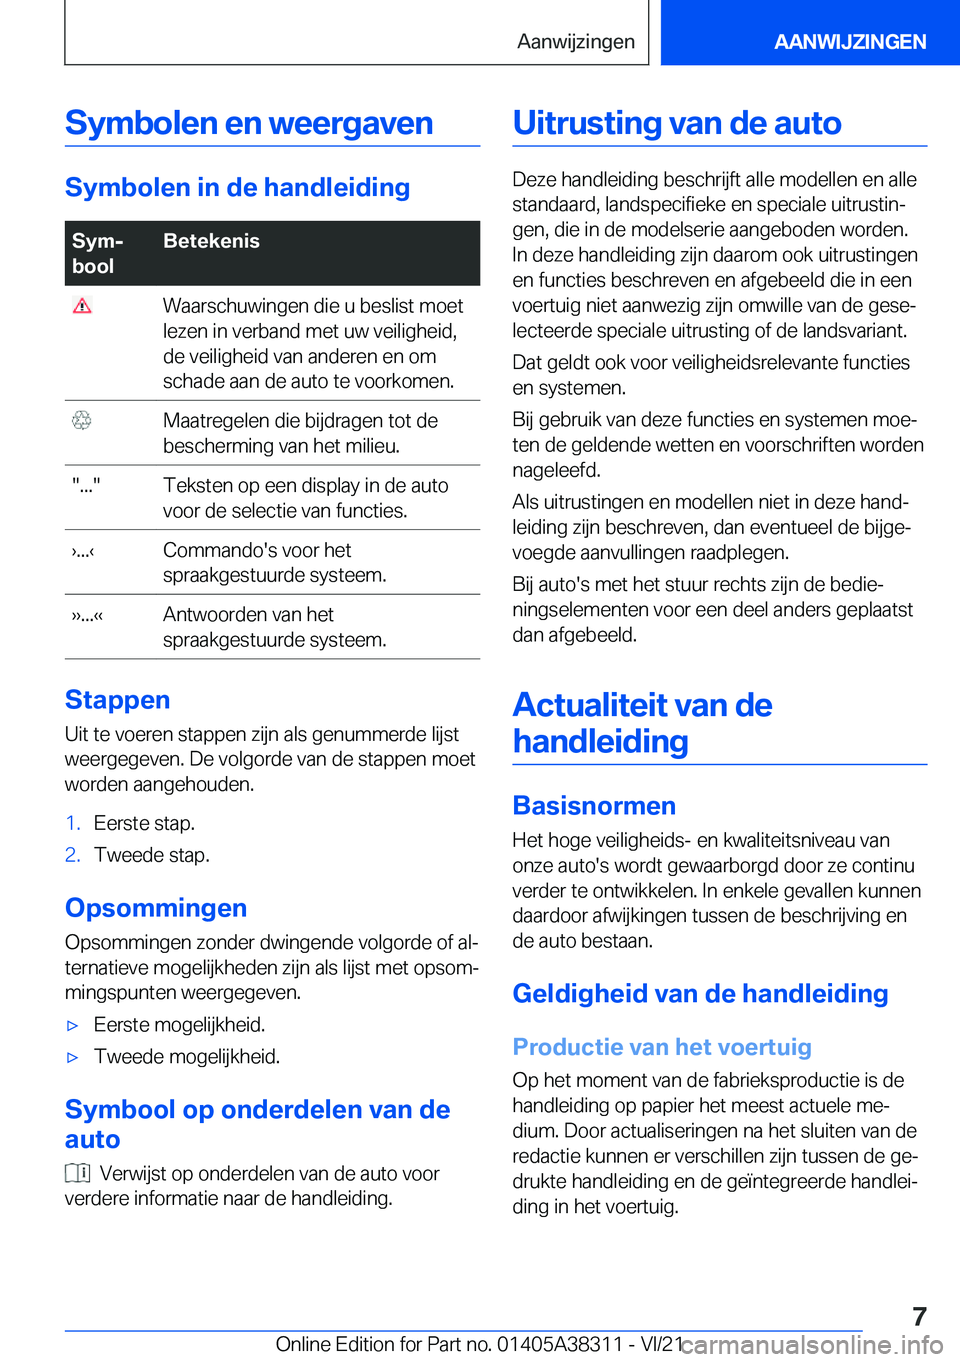 BMW 2 SERIES GRAN COUPE 2022  Instructieboekjes (in Dutch) �S�y�m�b�o�l�e�n��e�n��w�e�e�r�g�a�v�e�n
�S�y�m�b�o�l�e�n��i�n��d�e��h�a�n�d�l�e�i�d�i�n�g
�S�y�mj
�b�o�o�l�B�e�t�e�k�e�n�i�s��W�a�a�r�s�c�h�u�w�i�n�g�e�n��d�i�e��u��b�e�s�l�i�s�t��m�o�e�t
